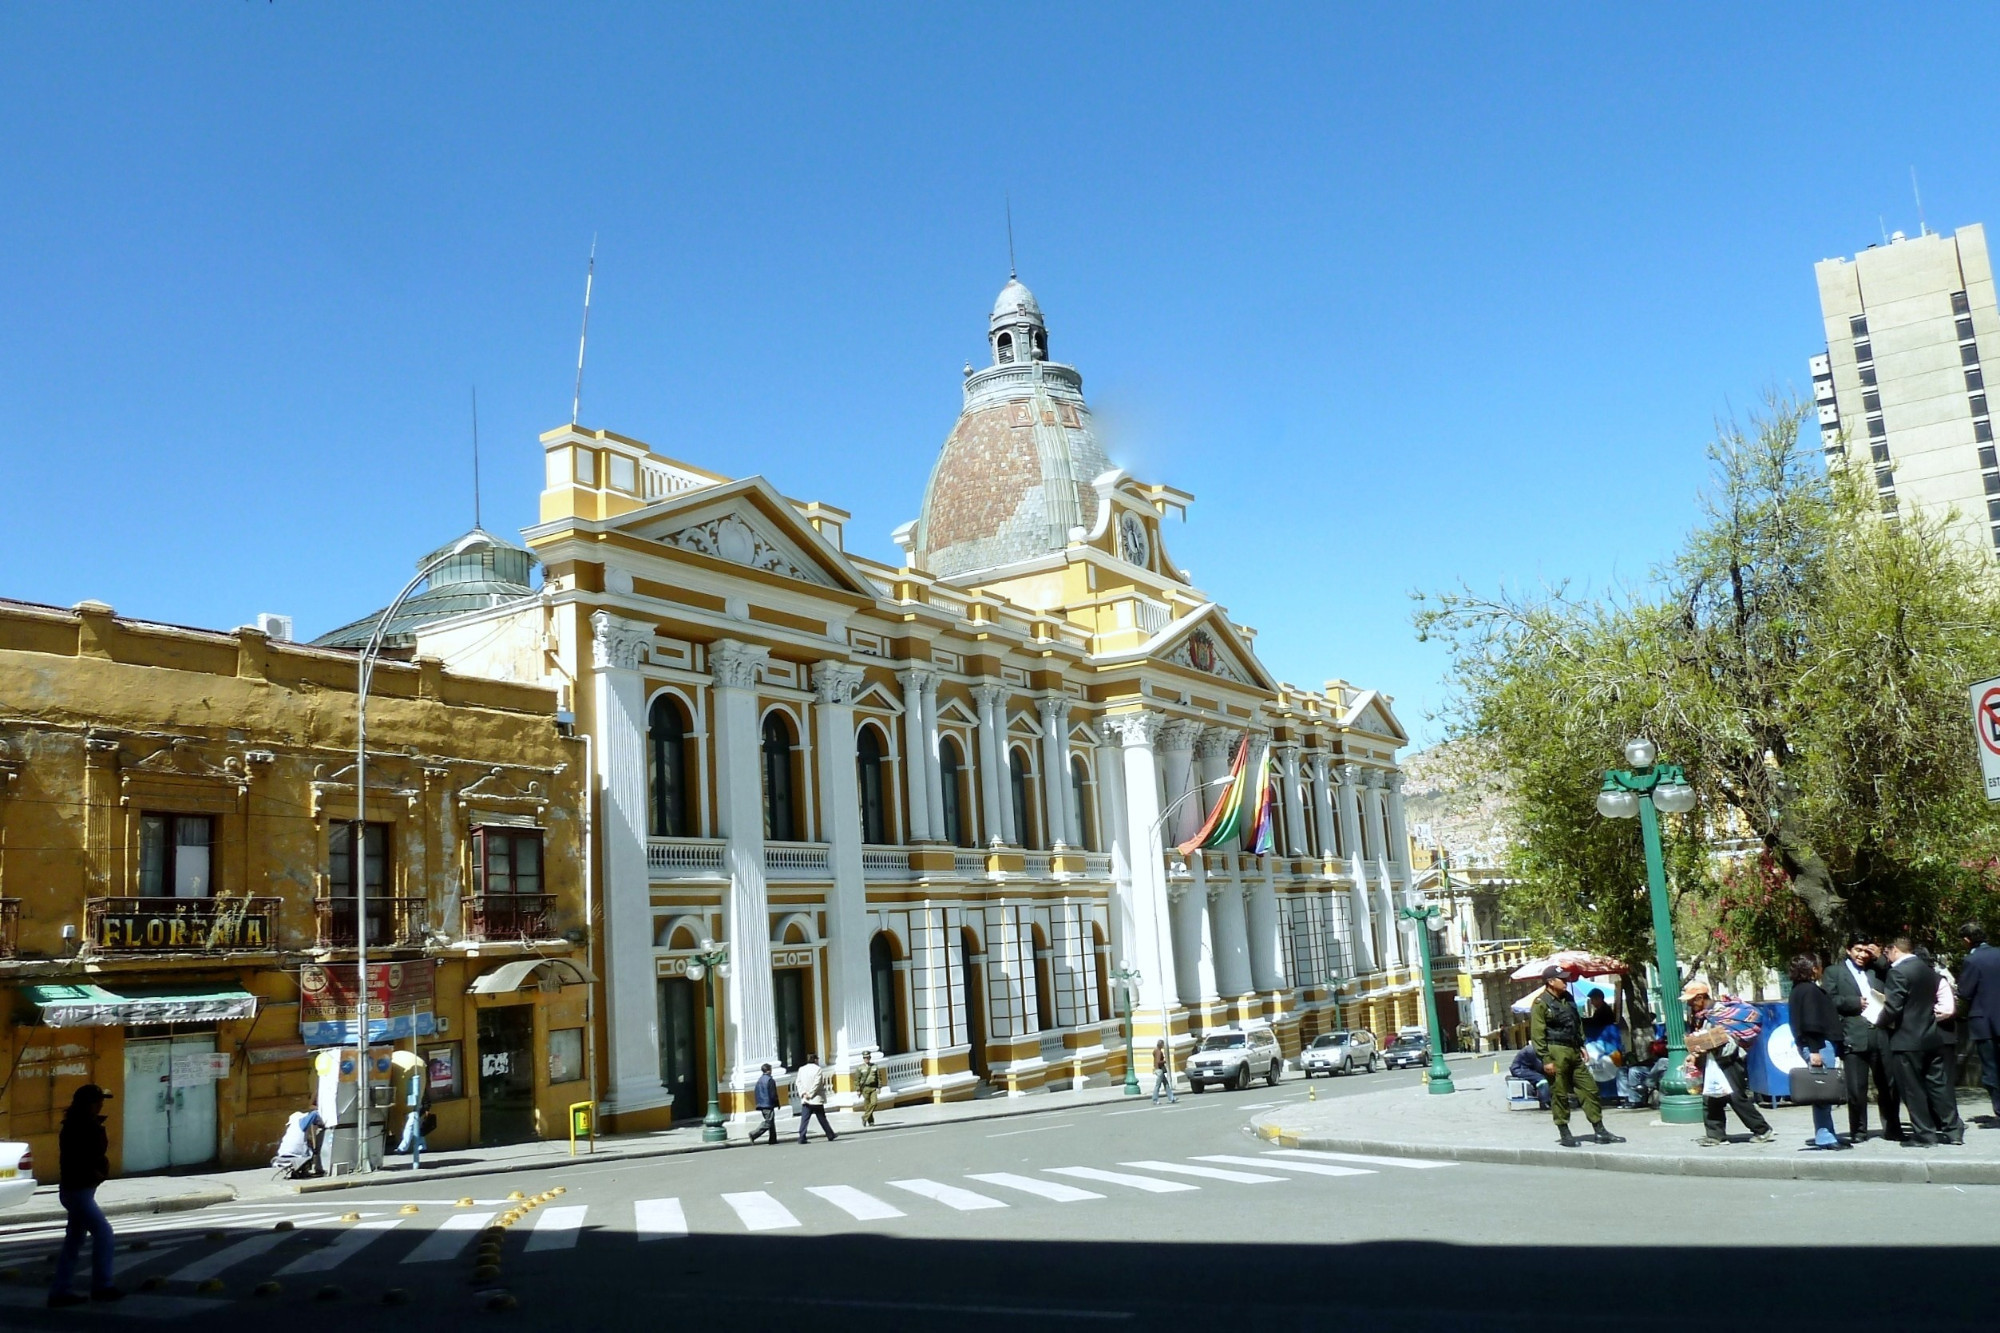 Palacio Legislativo De Bolivia<br/>
Local government office<br/>
